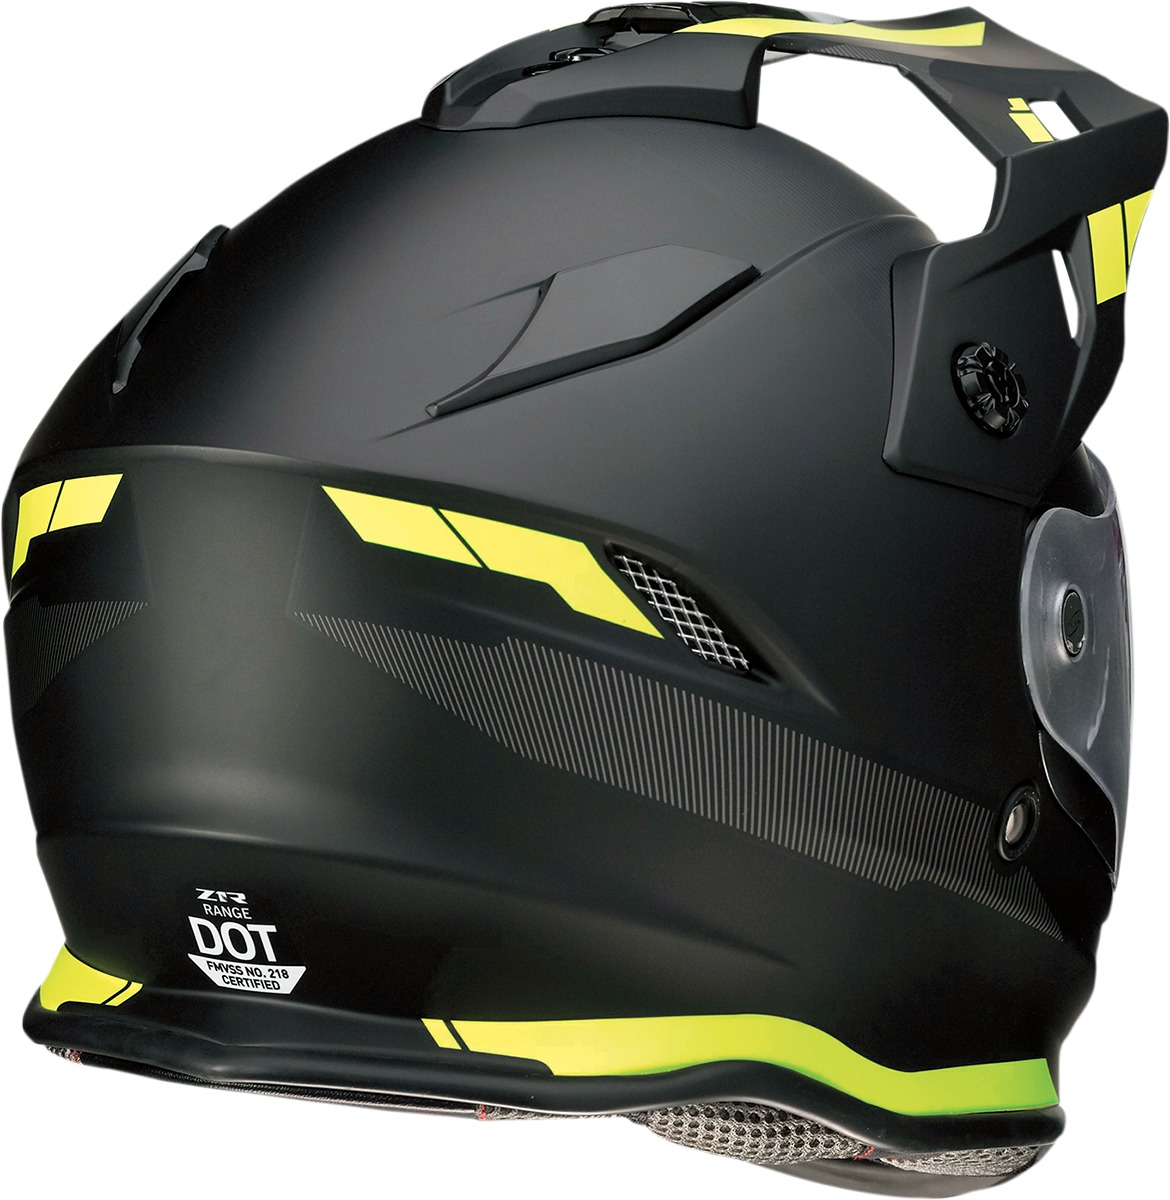 Range Dual Sport Helmet Small - Uptake Black/Hi-Viz - Click Image to Close